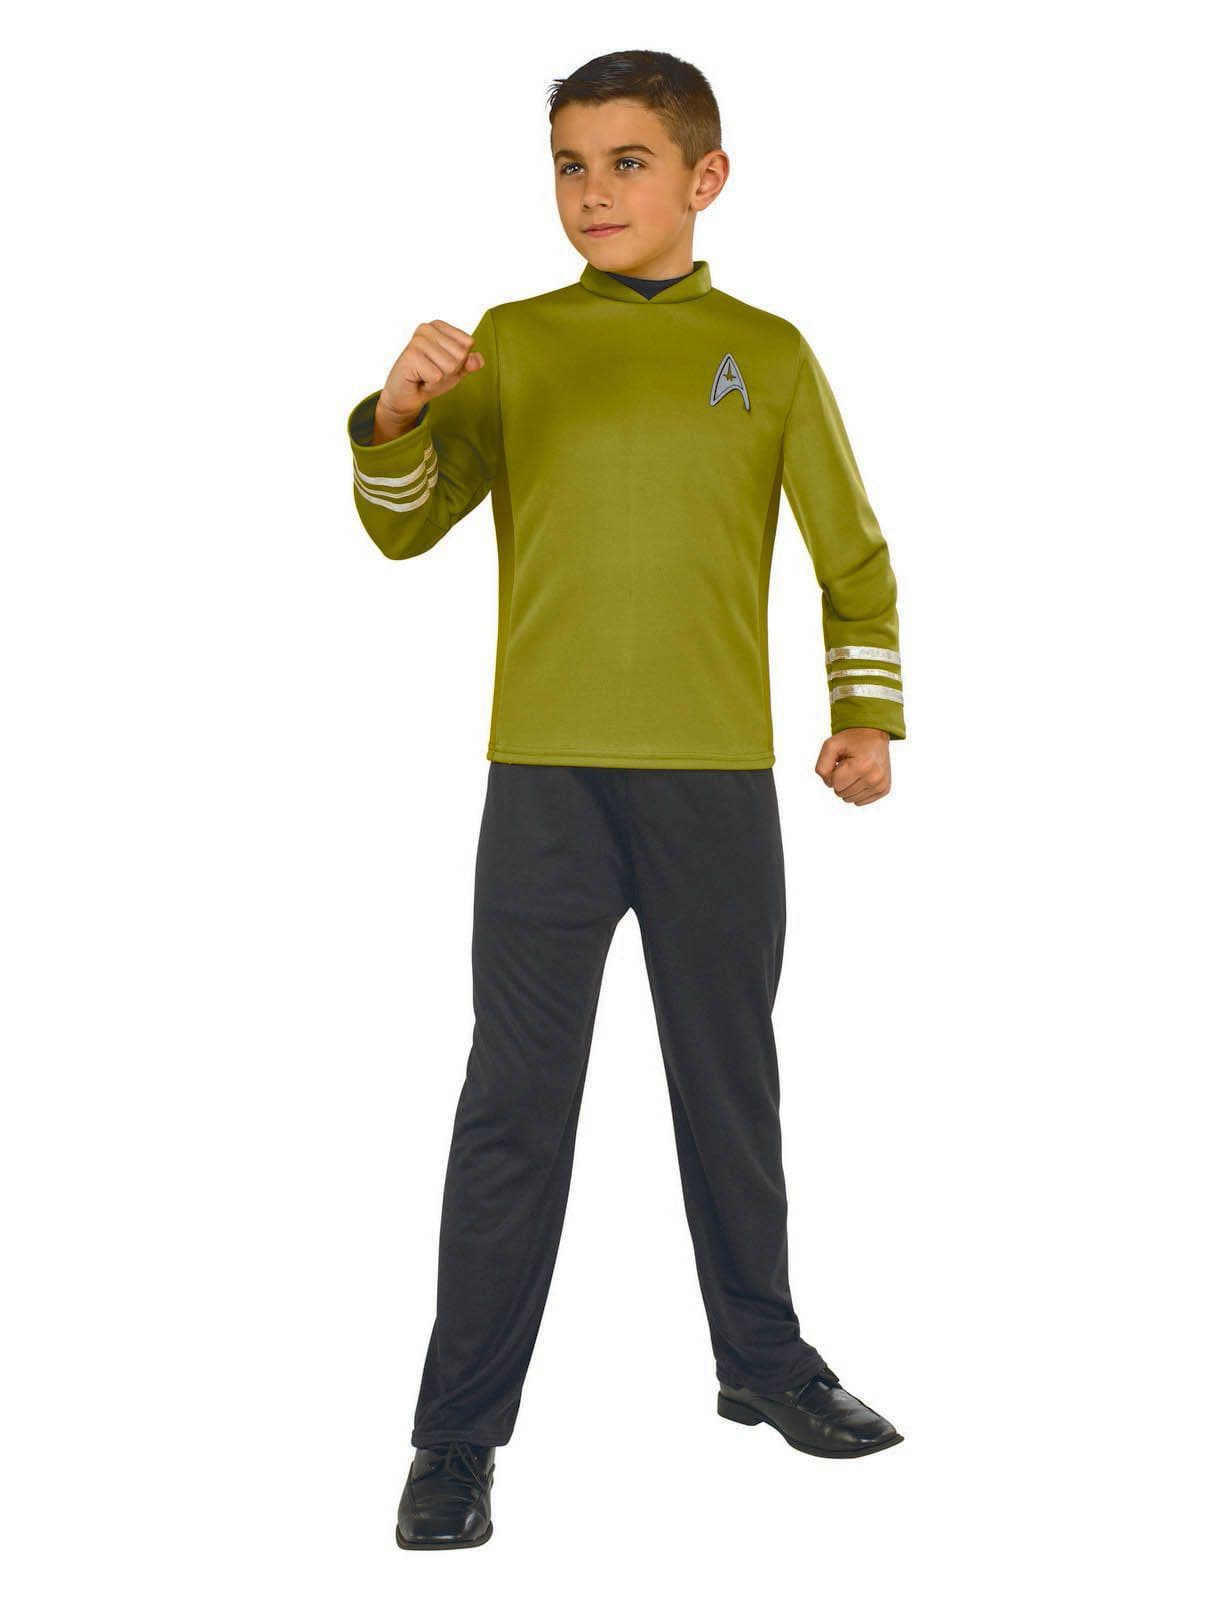 Kids Star Trek Captain Kirk Costume - costumes.com